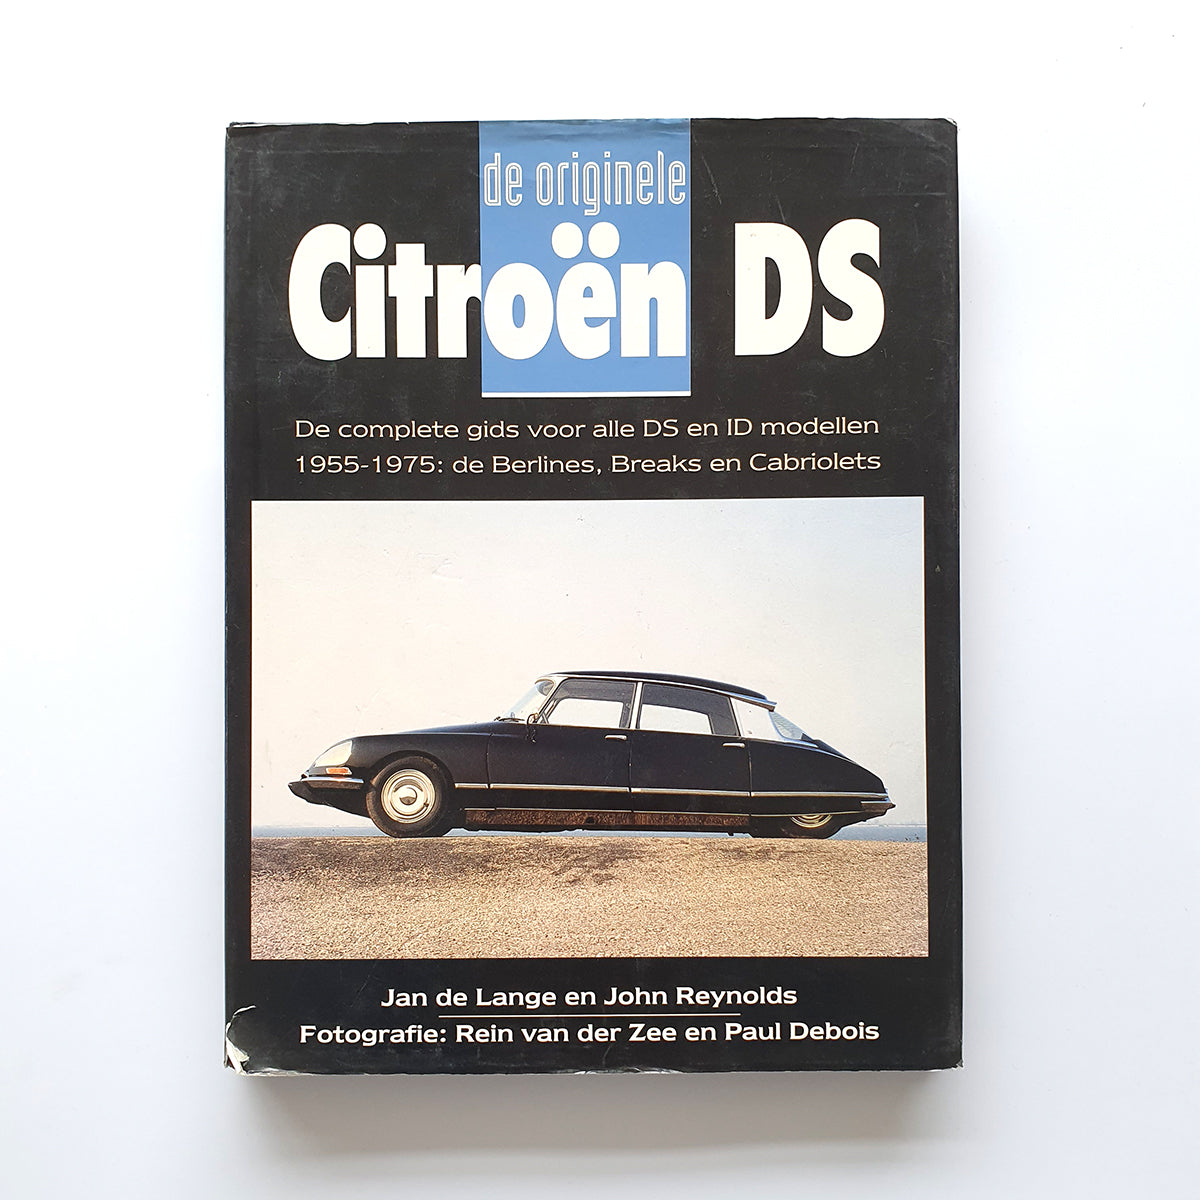 De originele Citroën DS: 1955-1975, berlines, breaks en cabriolets